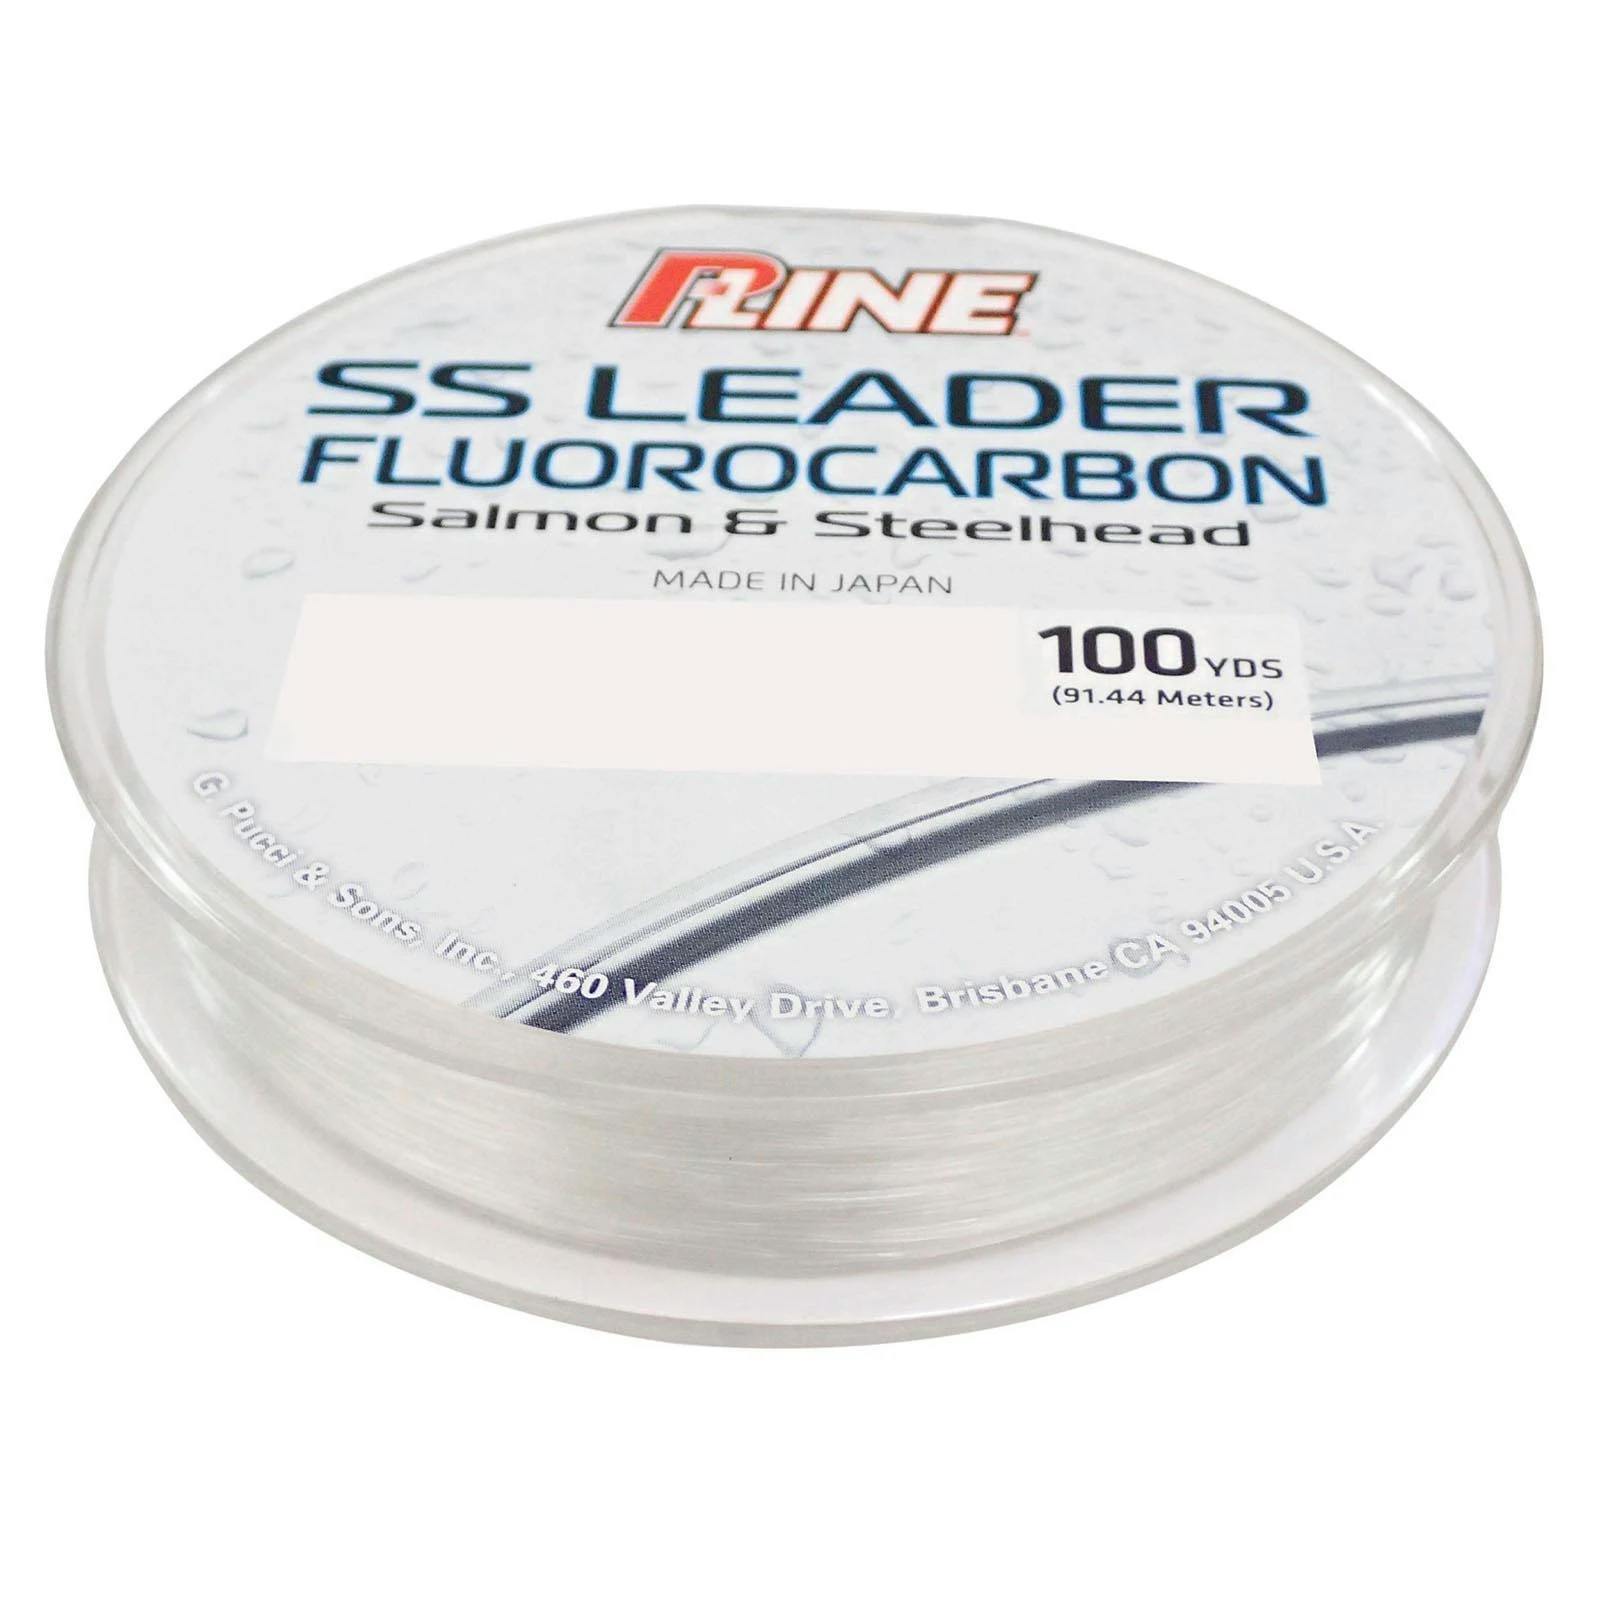 P-Line Salmon/Steelhead Fluorocarbon Leader 100 Yards 25 pound